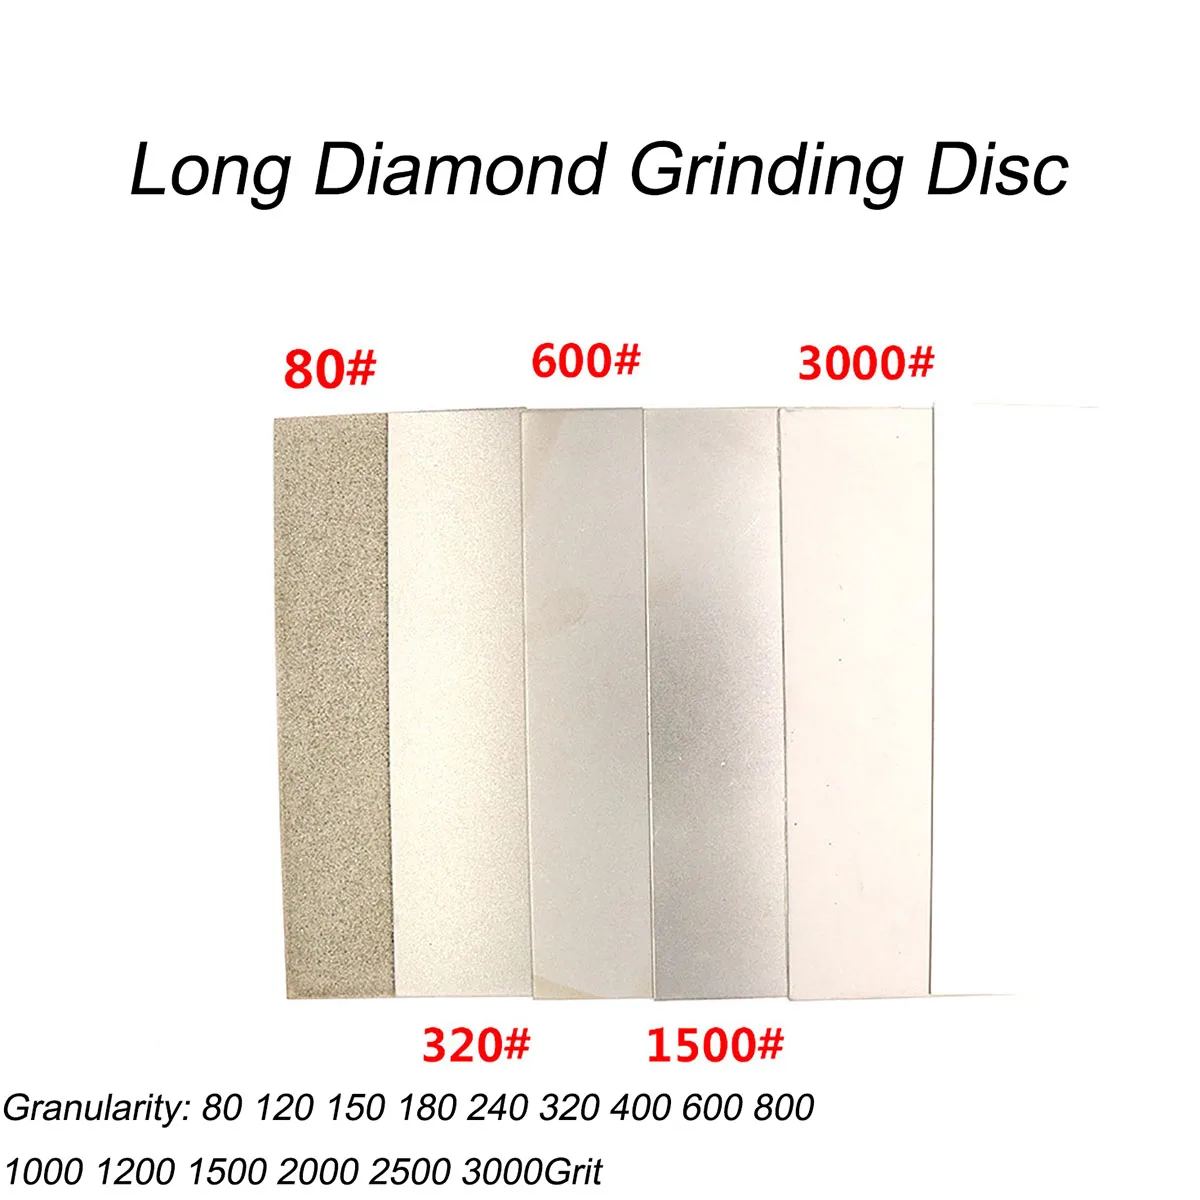 

1Pc Long Diamond Grinding Disc Granularity 80 120 150 180 240 320 400 600 800 1000 1200 1500 2000 2500 3000Grit for Polishing